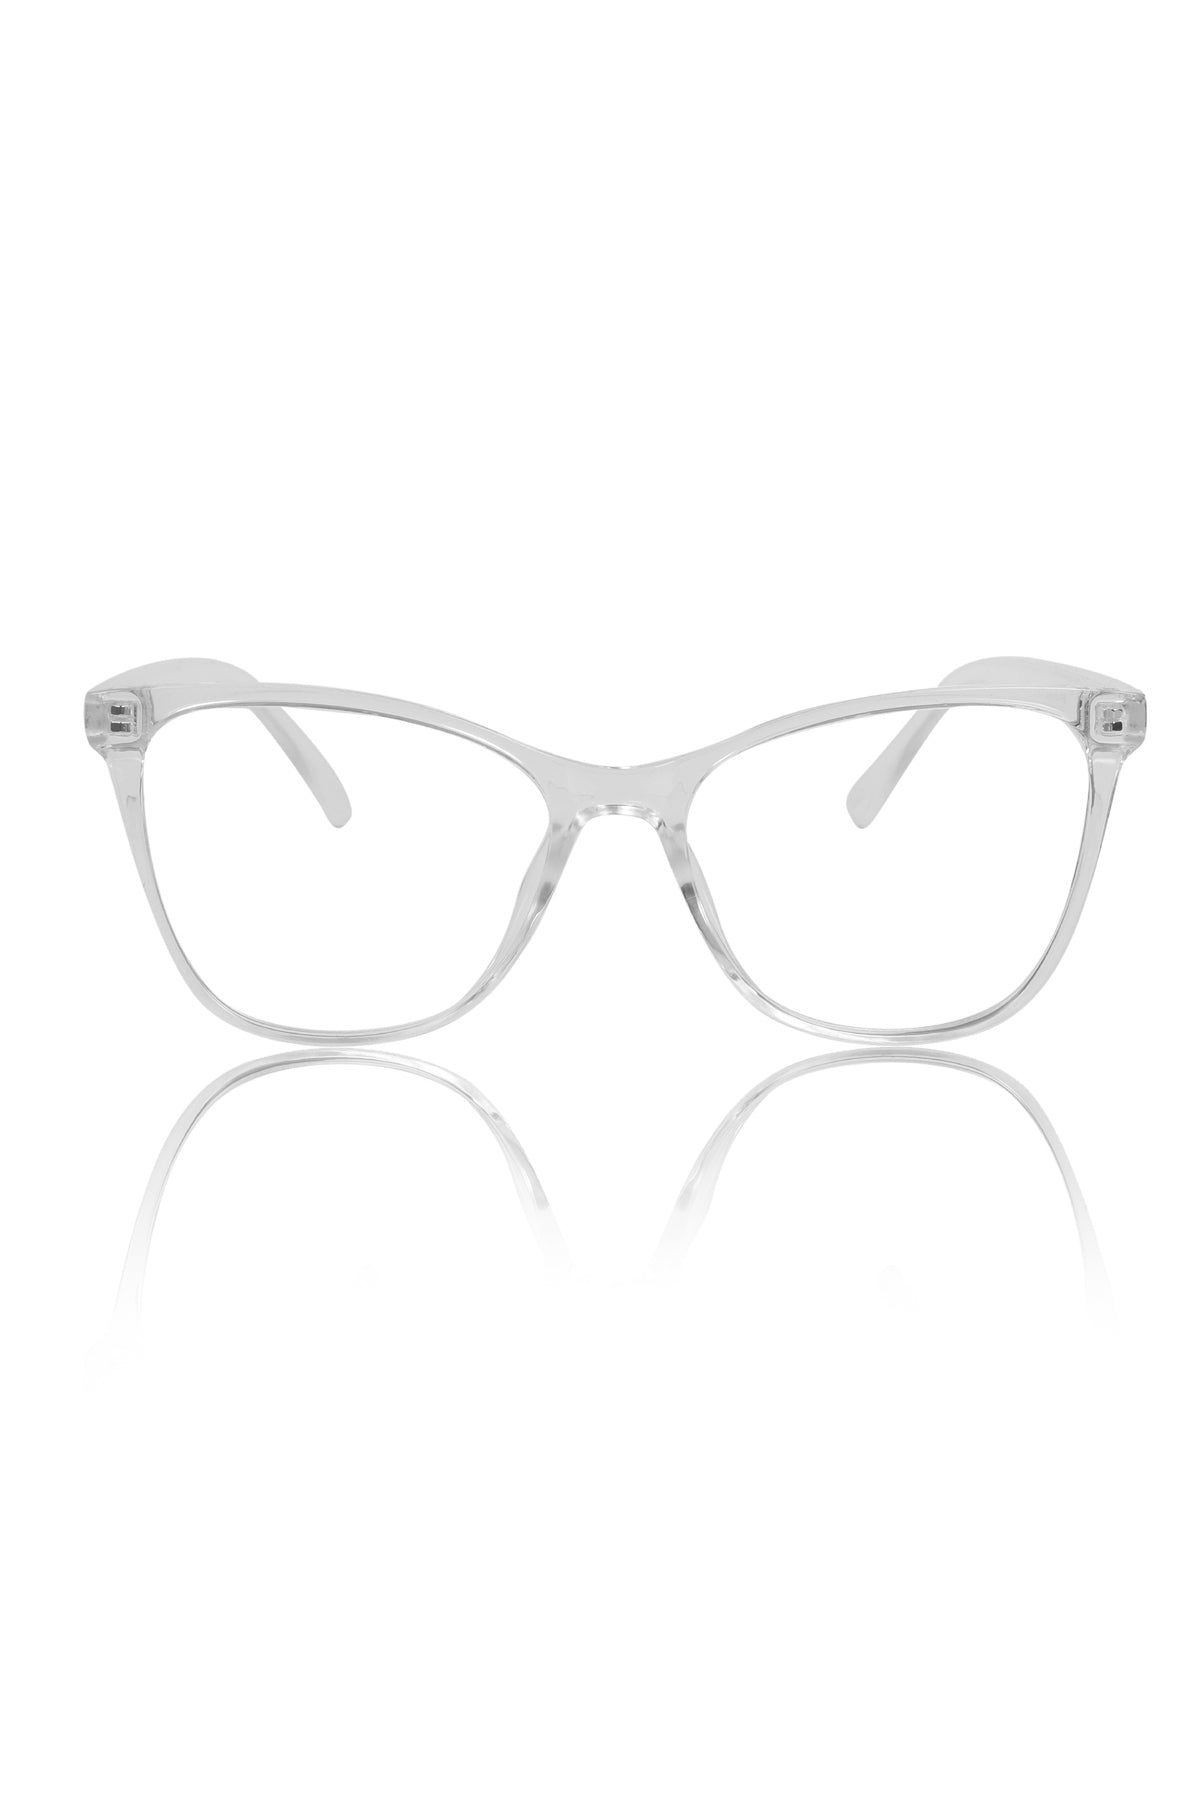 Jodykoes® Stylish Looking Over size Cat Eye Spectcale Frame | Anti Glare Computer Protection Eyewear Eyeglasses For Women (Transparent) - Jodykoes ®